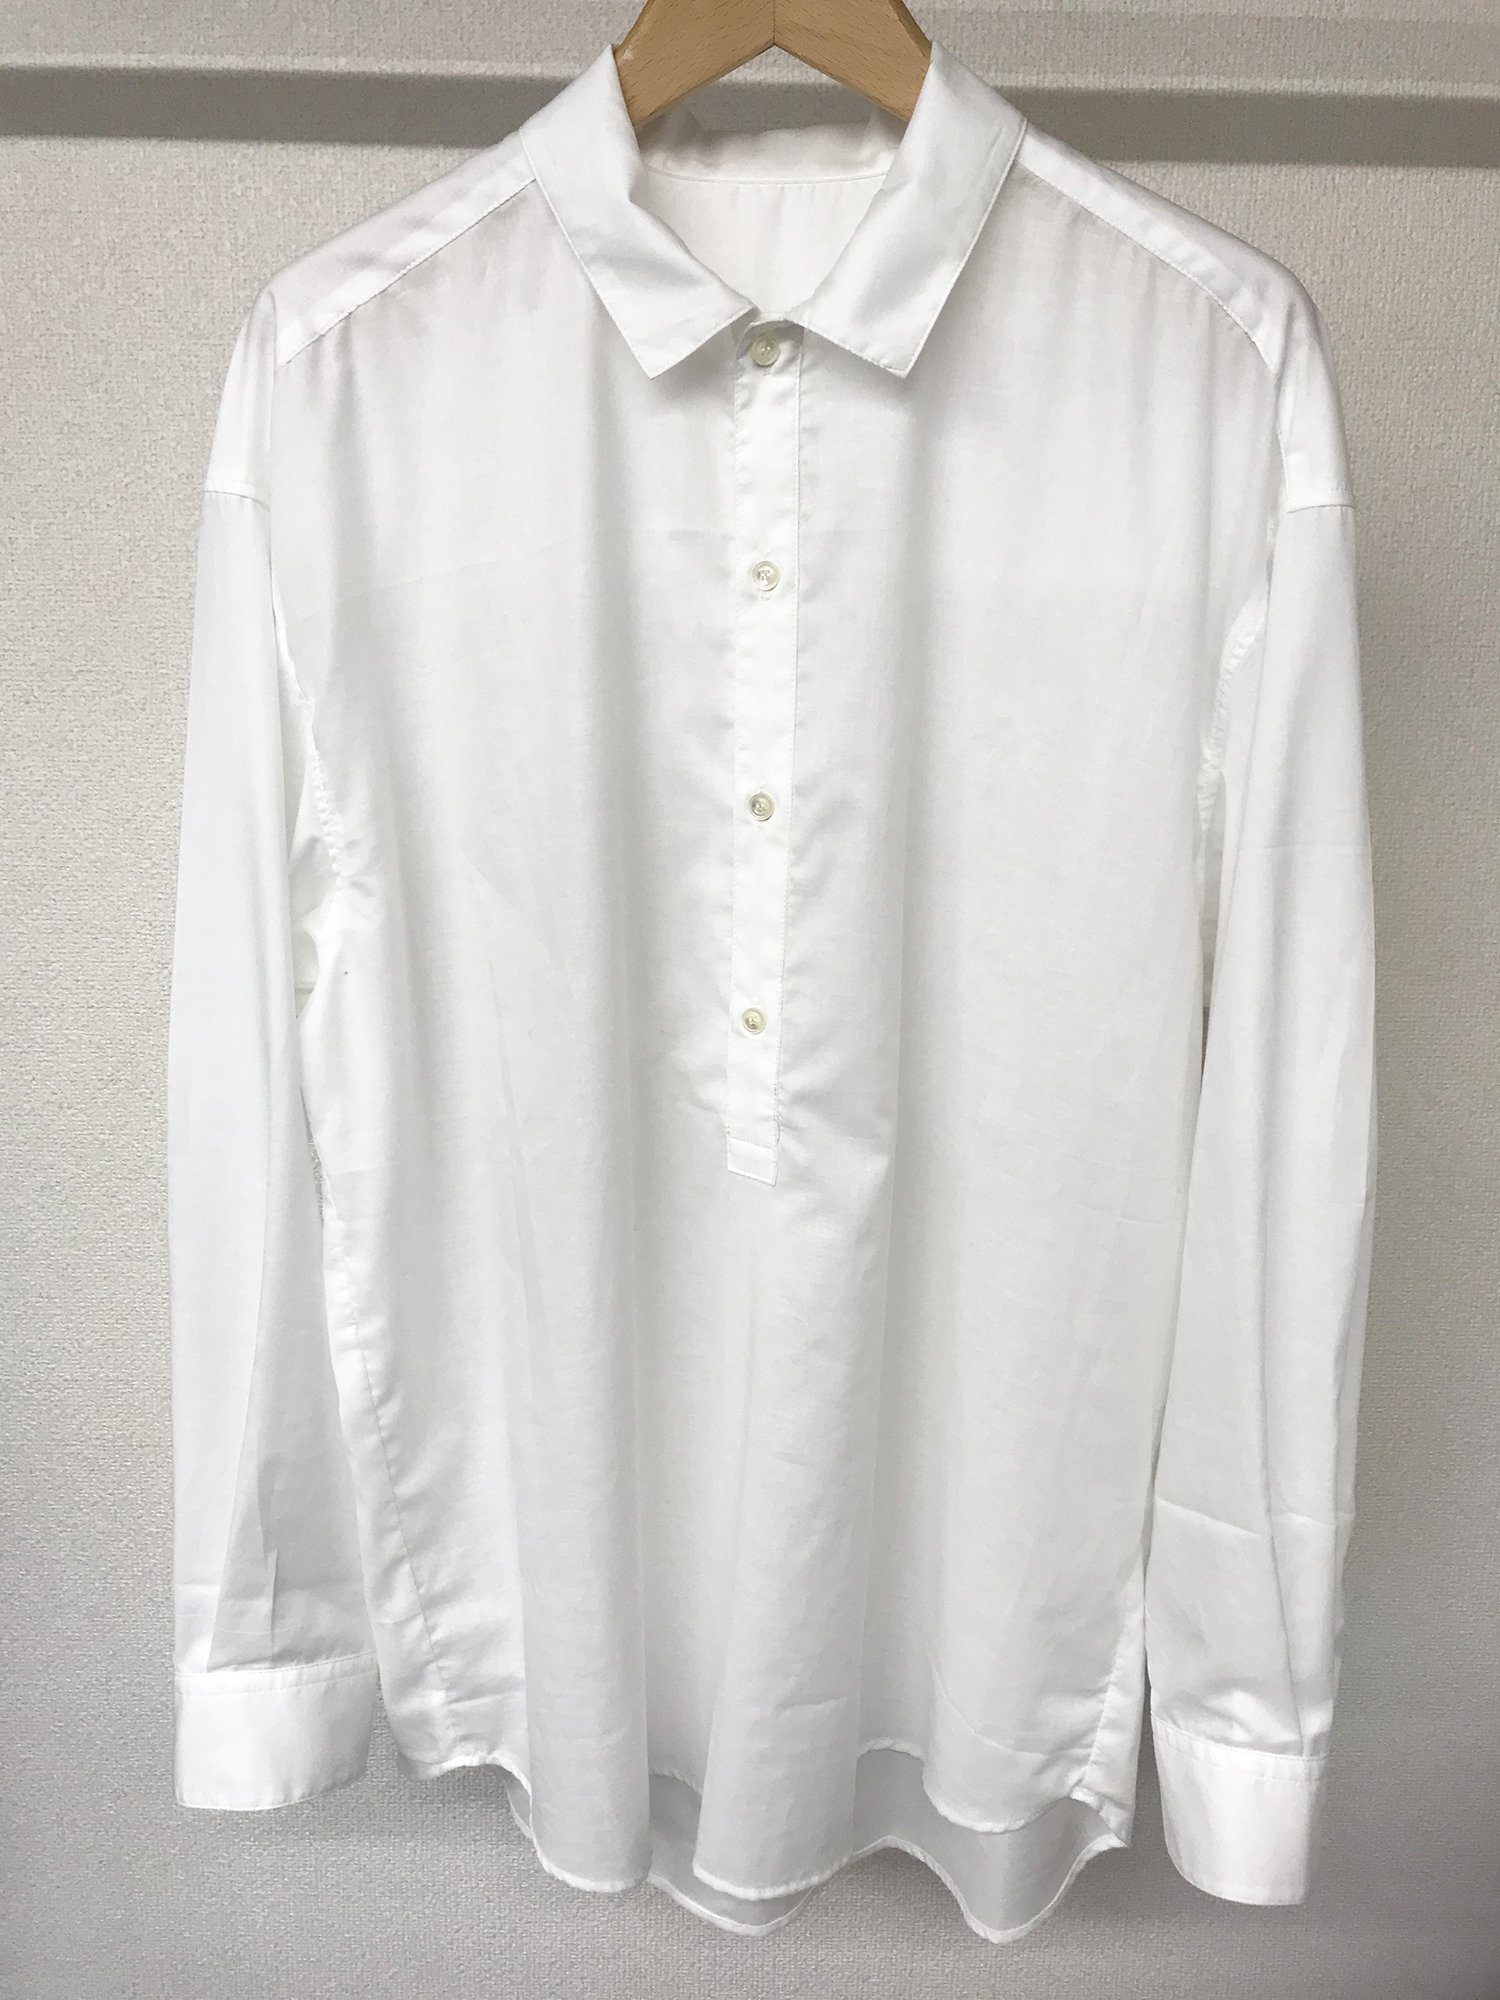 Johnny shirts WHITE